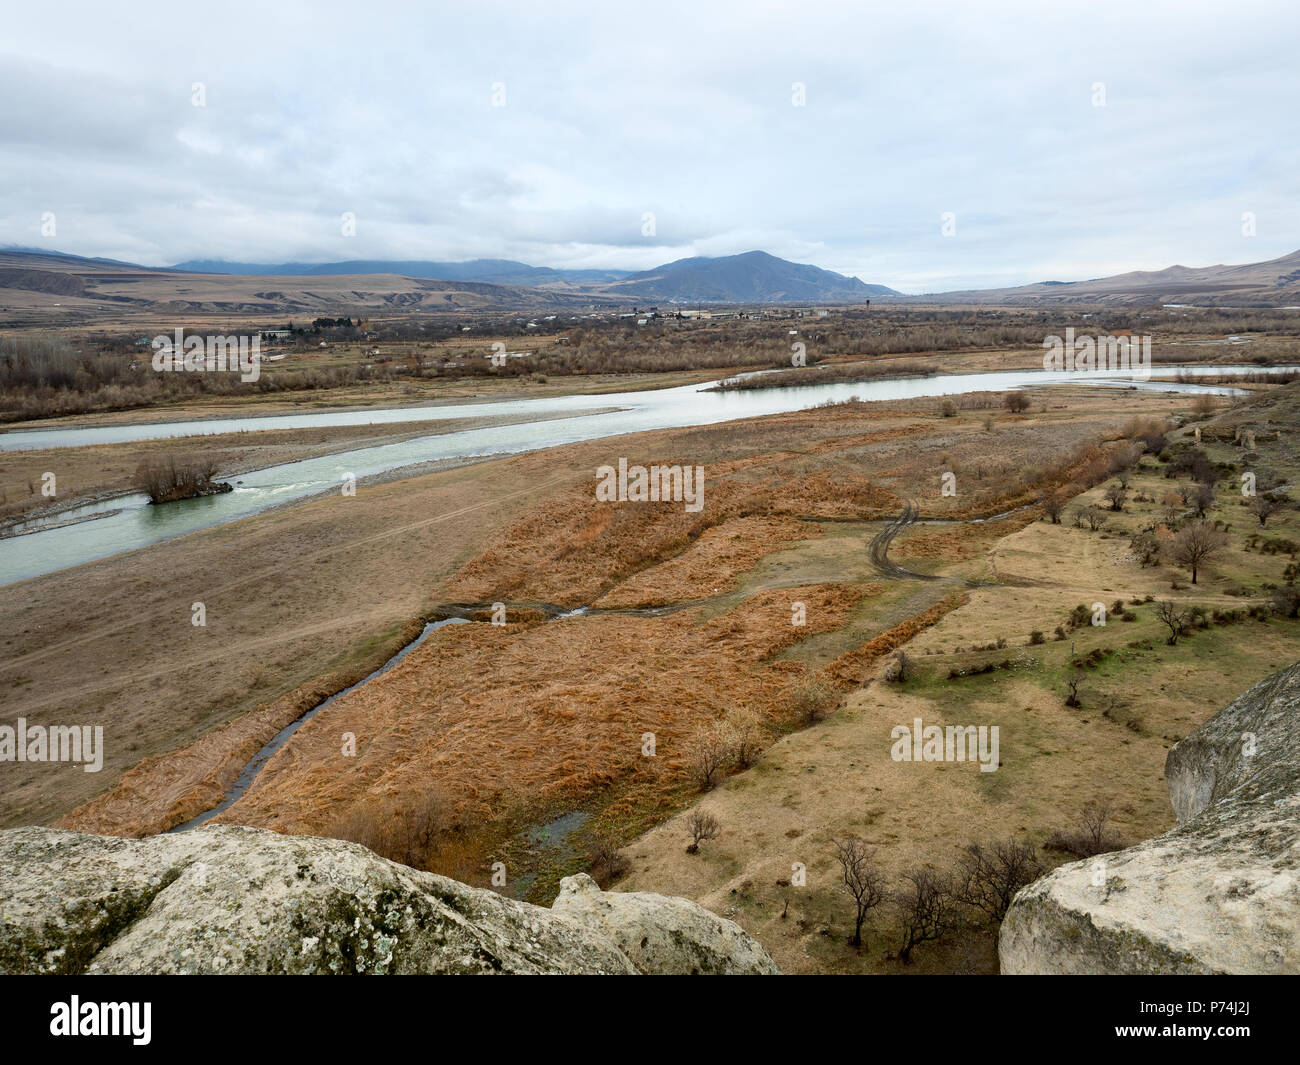 Kura river valley paesaggio, Shida Kartly regione, Georgia Foto Stock